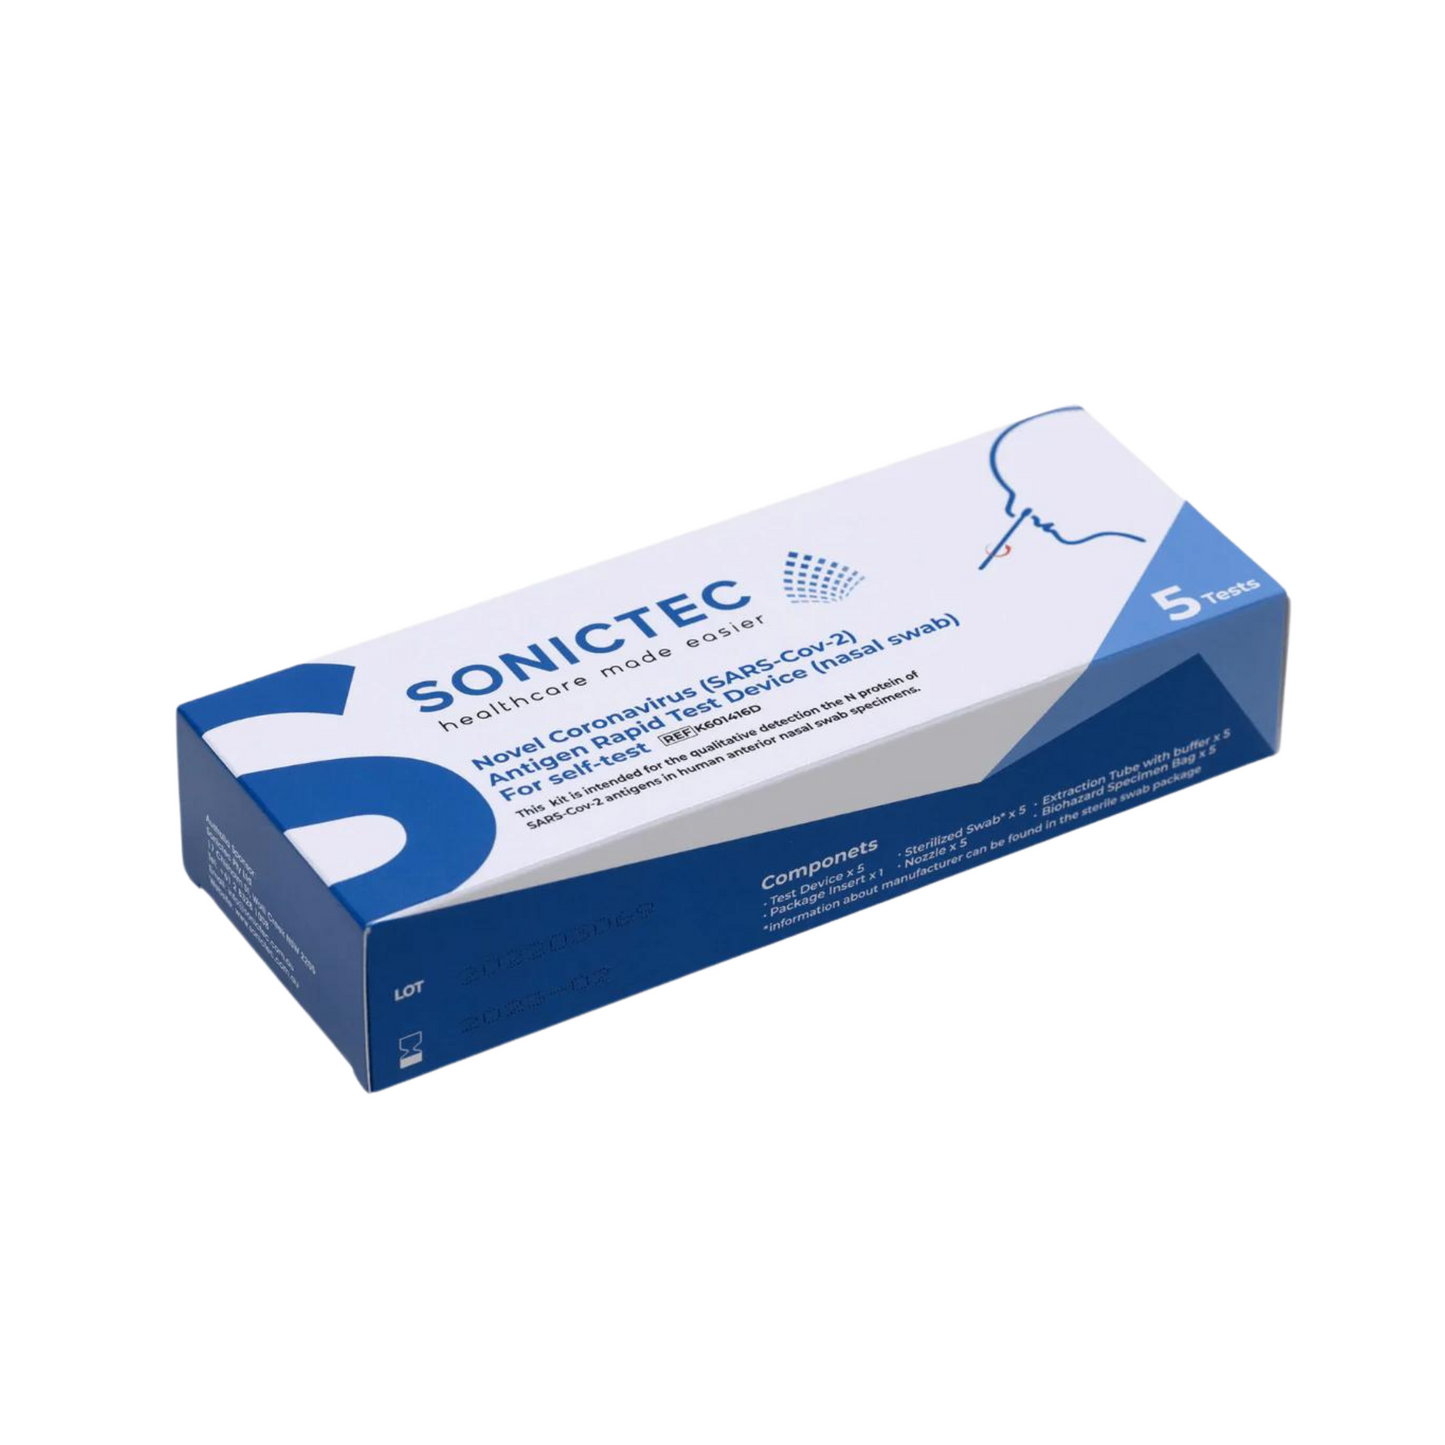 Sonictec Covid-19 Rapid Antigen Test Kit (Nasal Swab) - Pack of 5 (5 Tests)